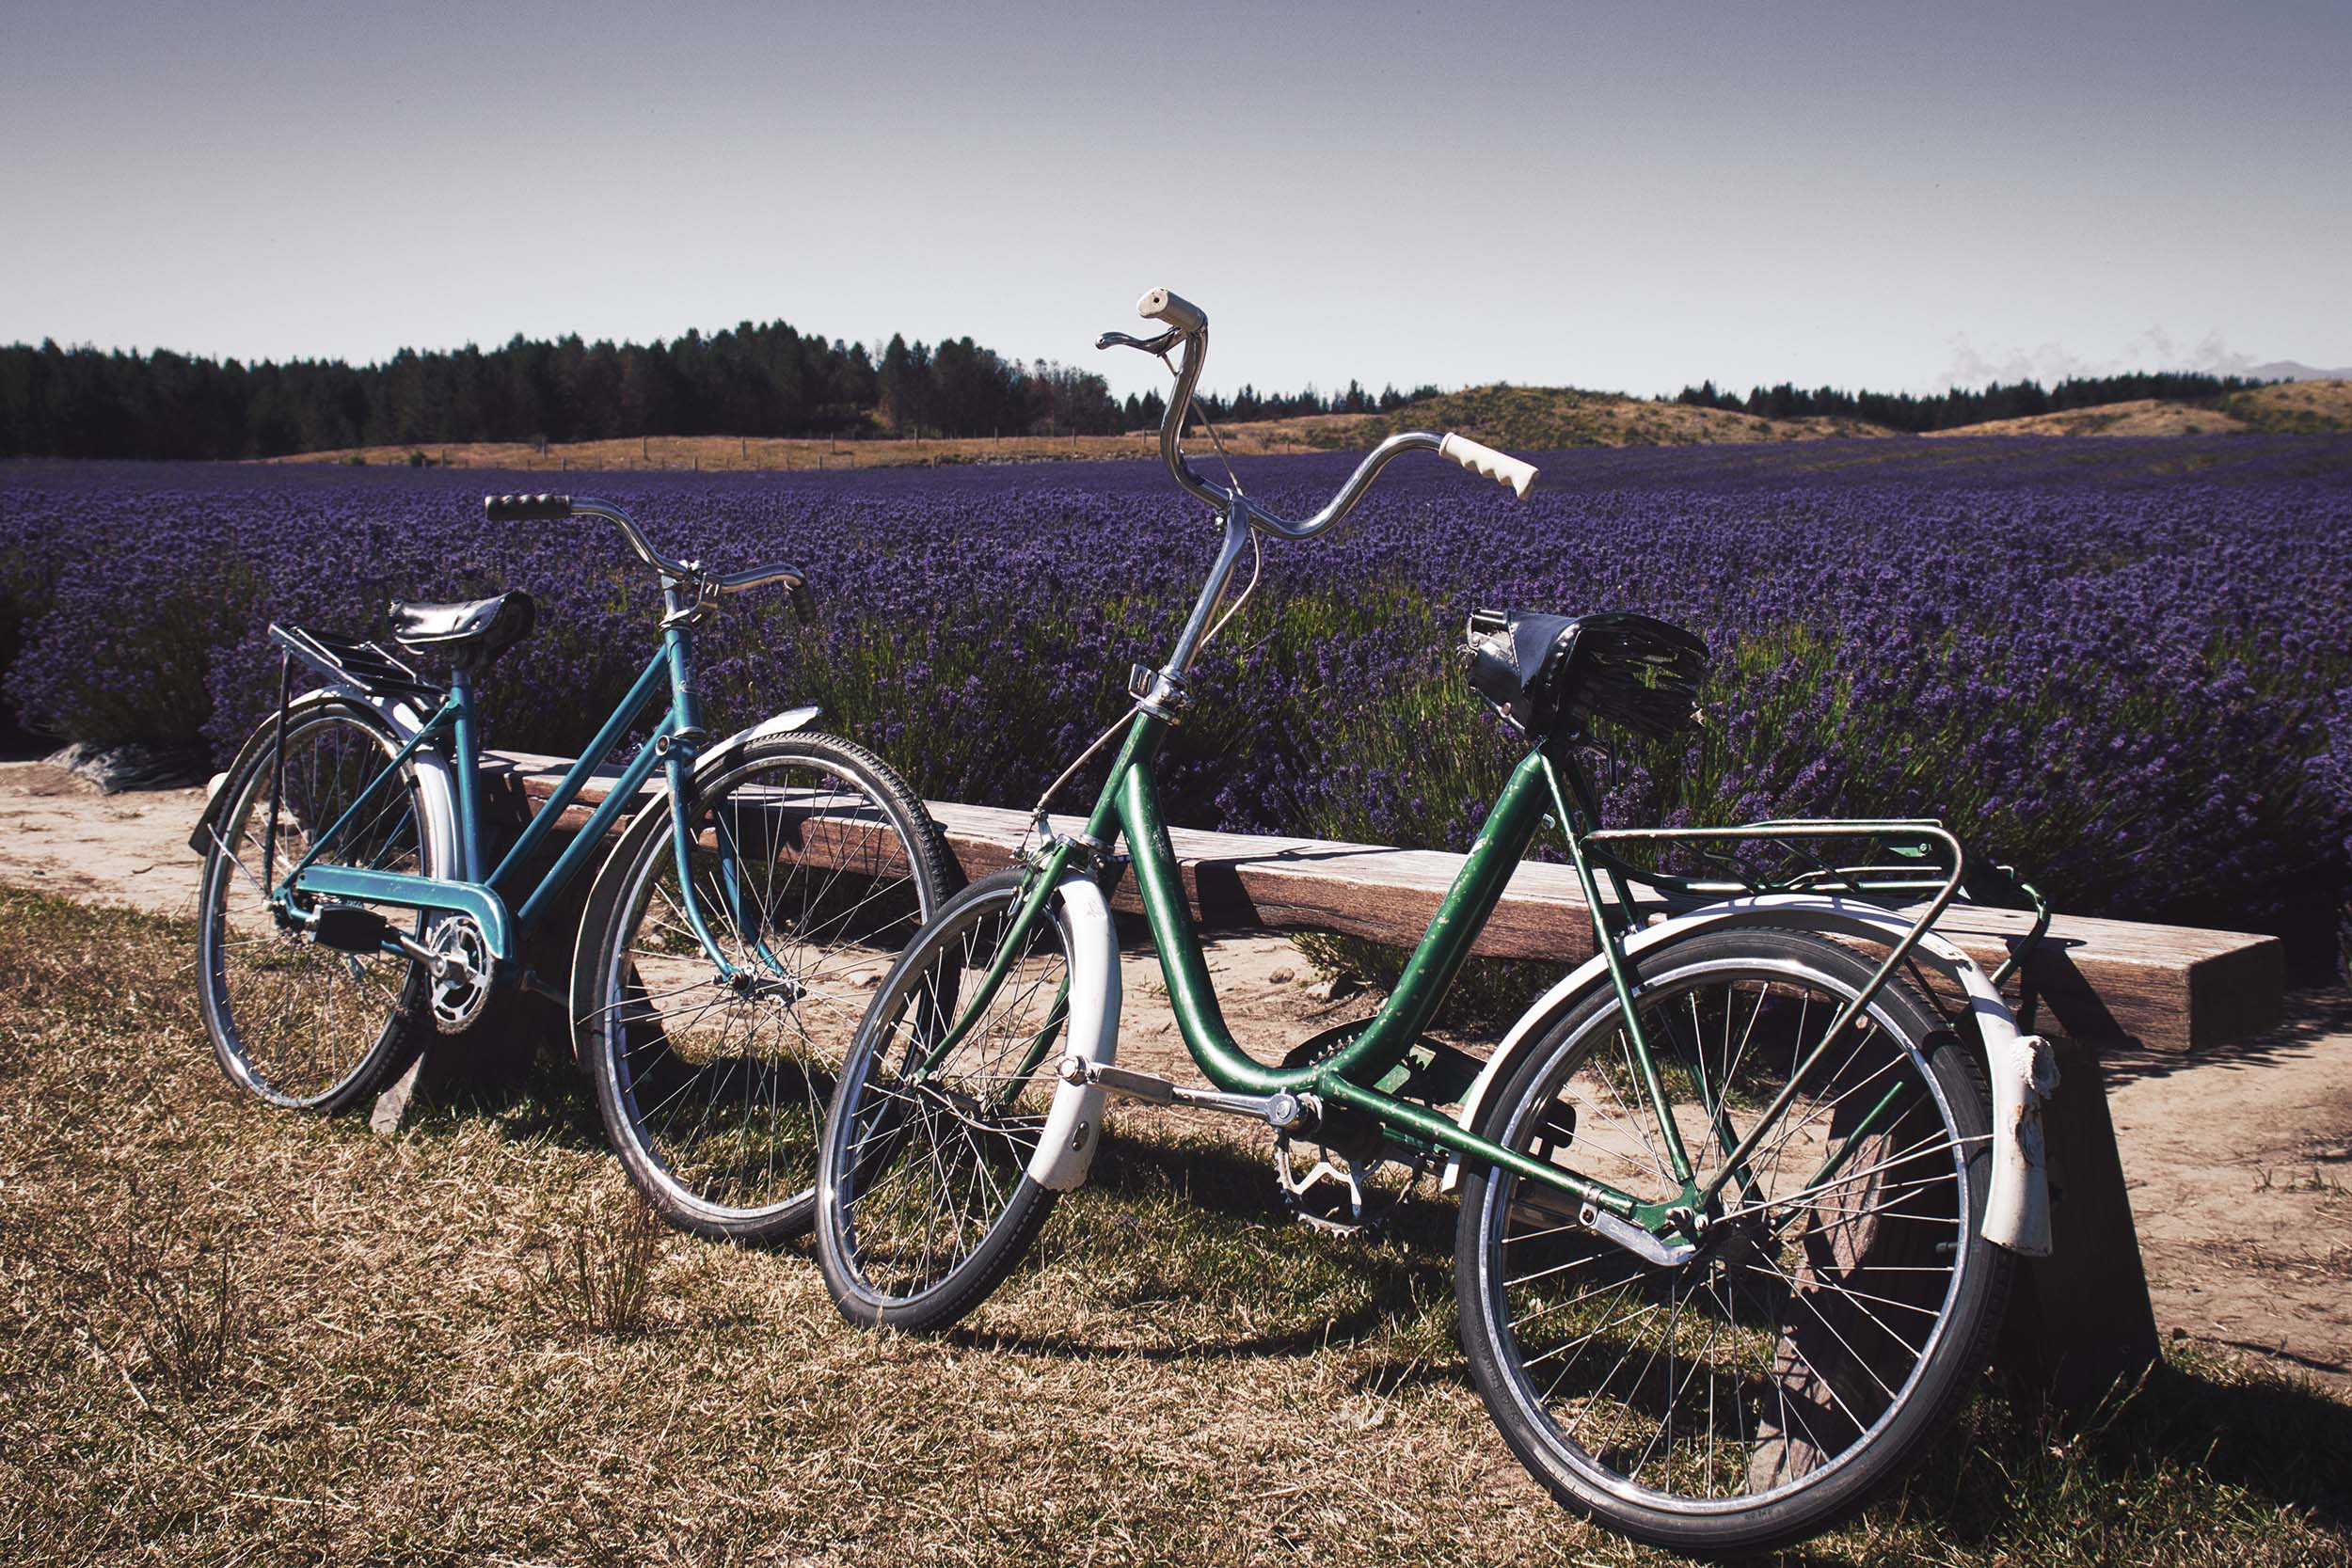 Eco-friendly bike tour through a lavender farm